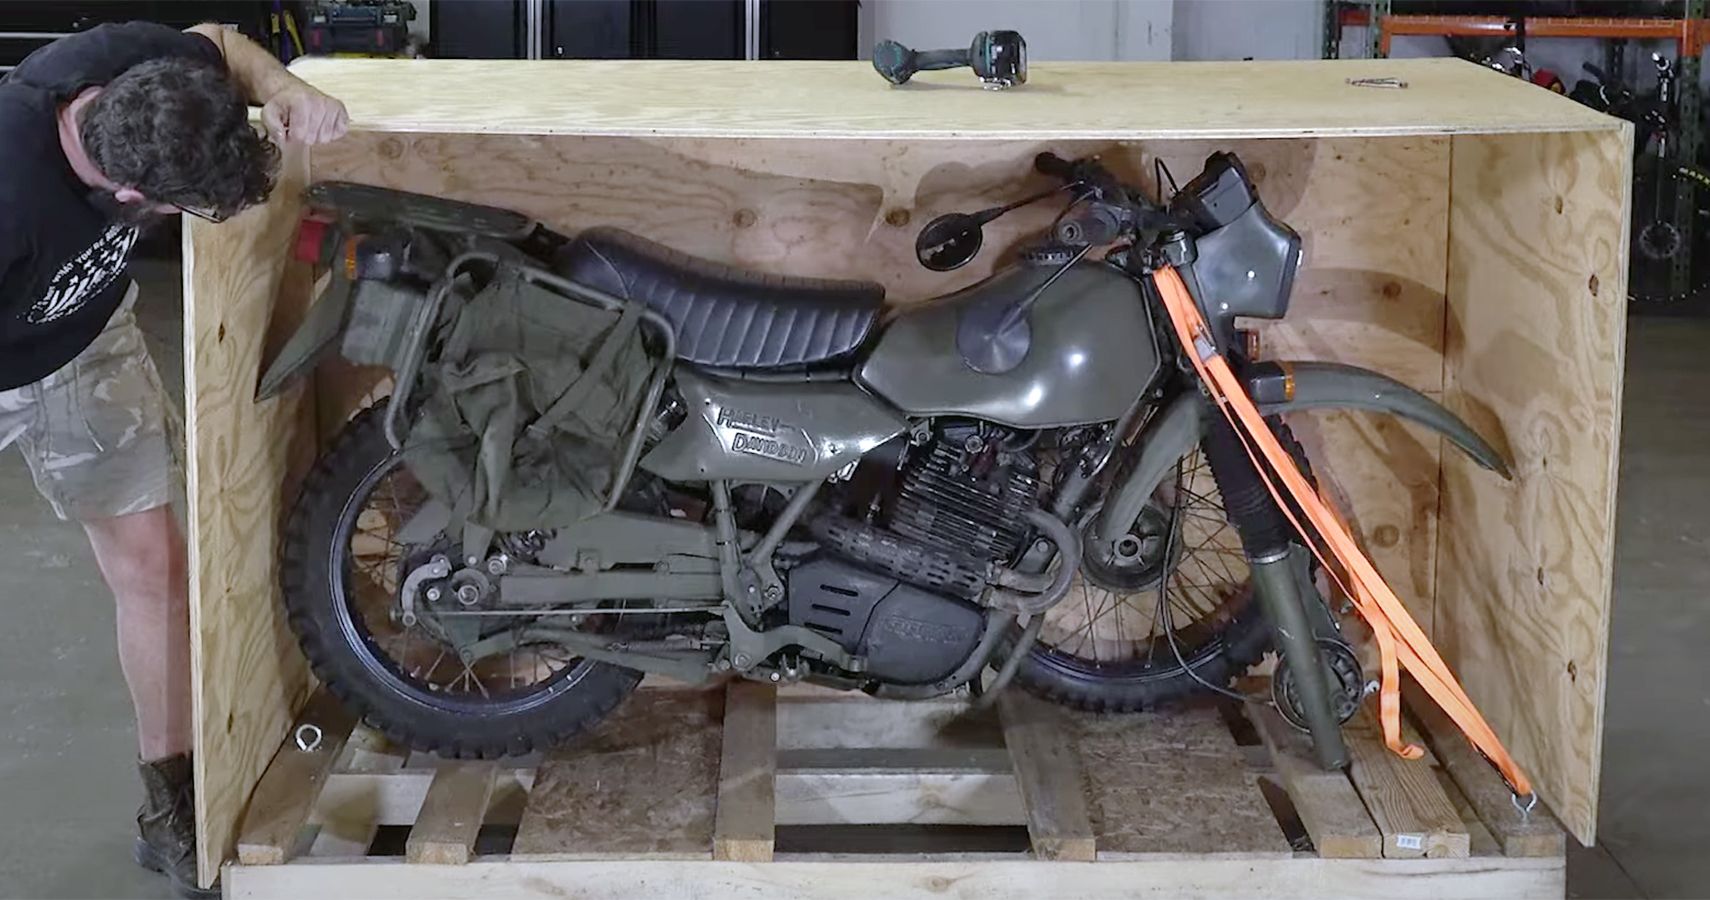 Ultra-Rare Harley-Davidson MT500 Military Dirt Bike Has A Dirty Little Secret